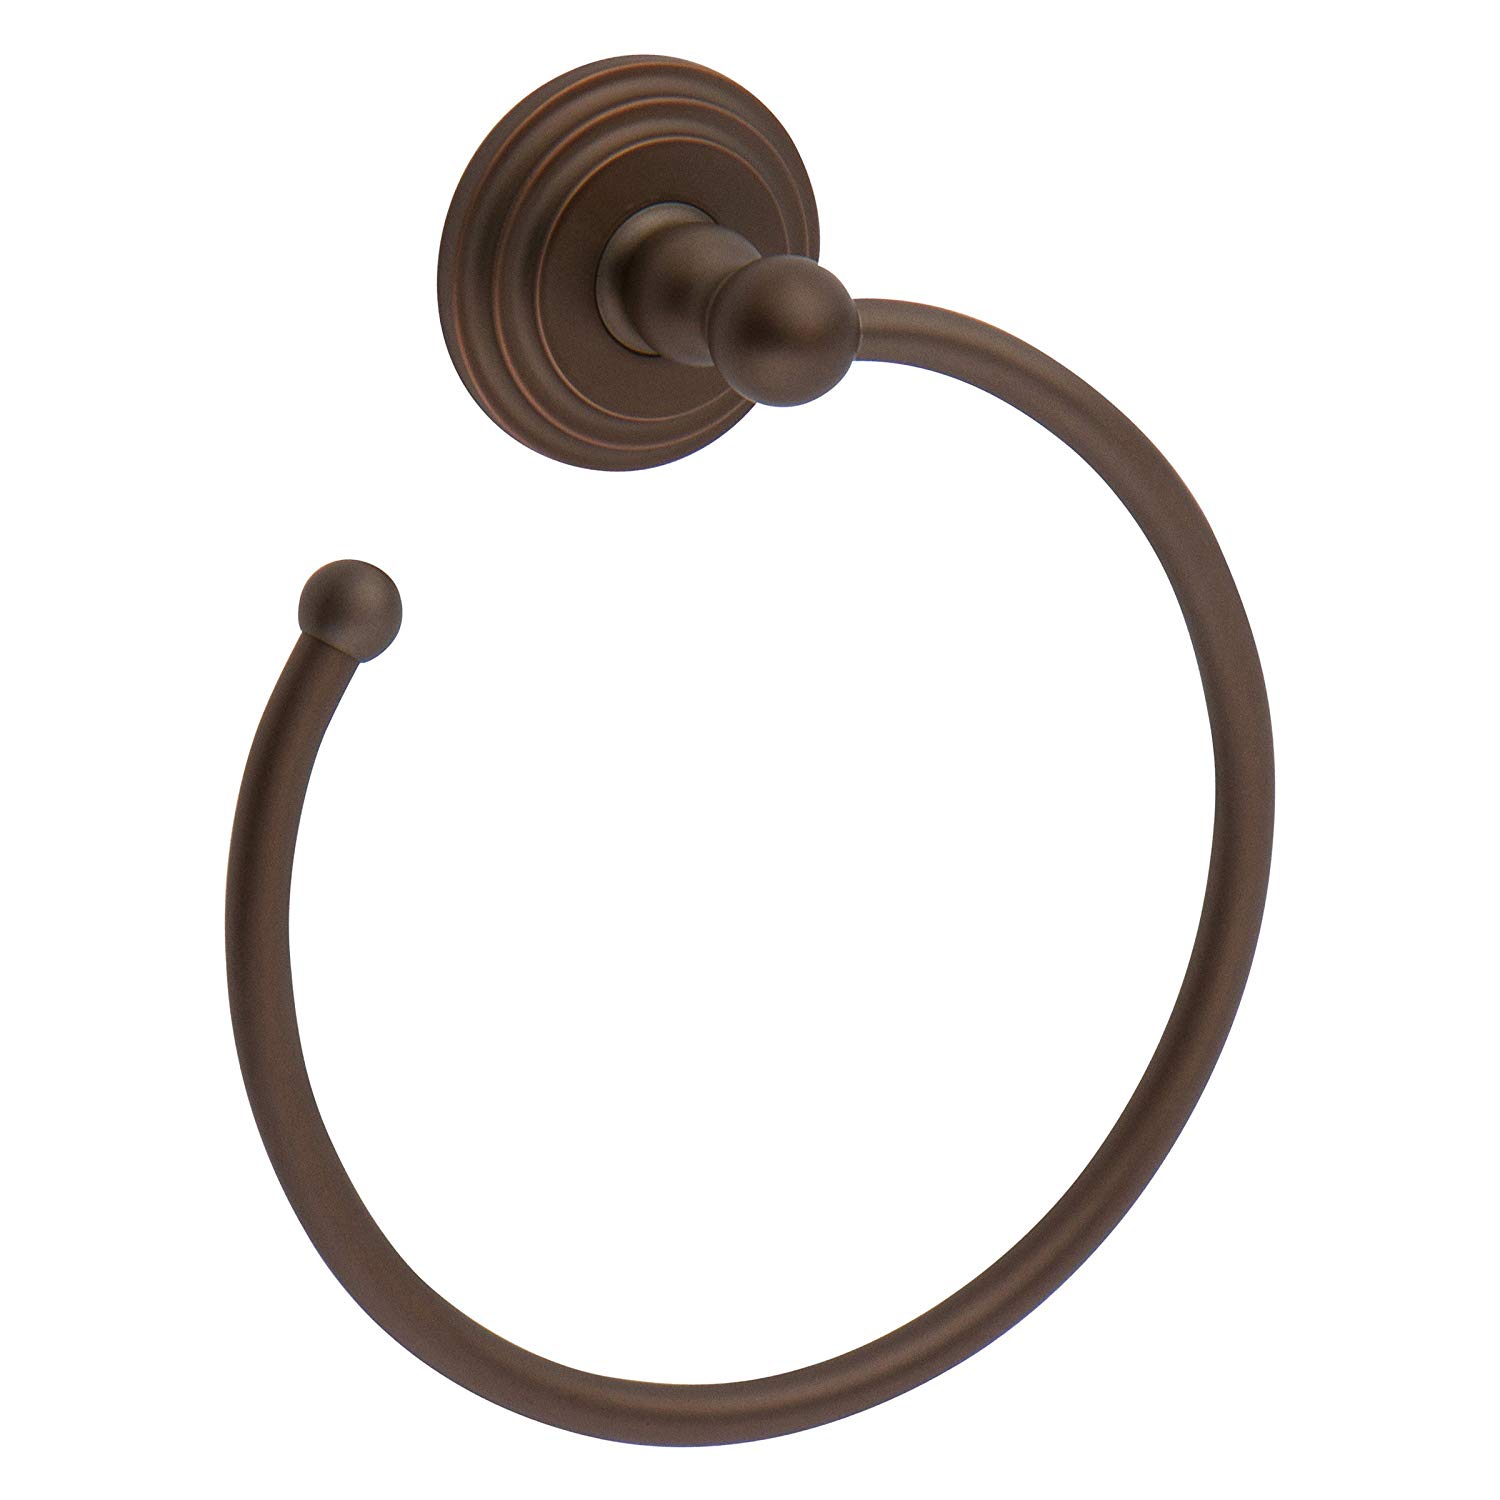 Chelsea Open Towel Ring in Oil Rubbed Bronze